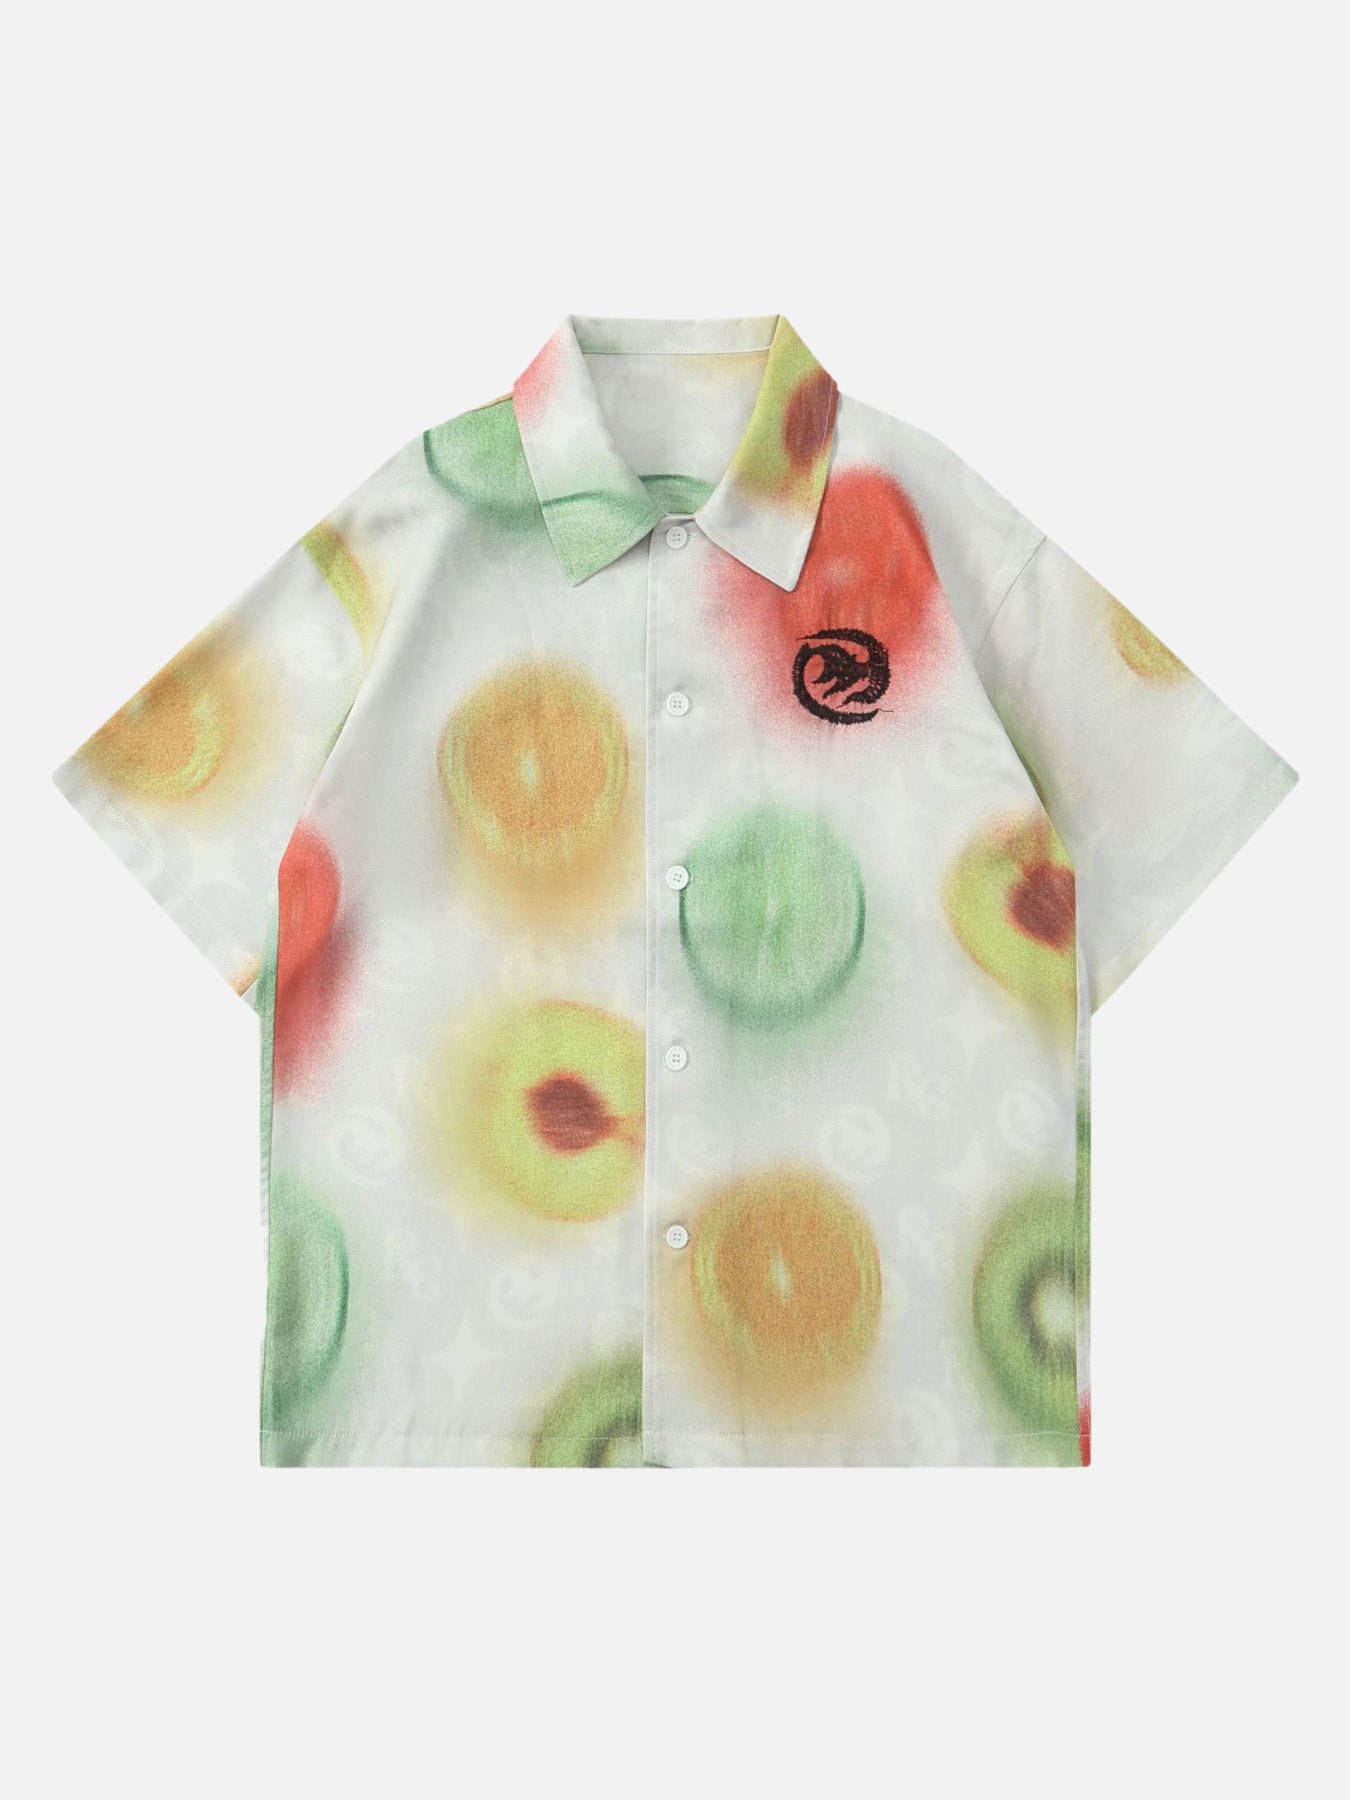 The Supermade High Street Polka Dot Short Sleeve Shirt